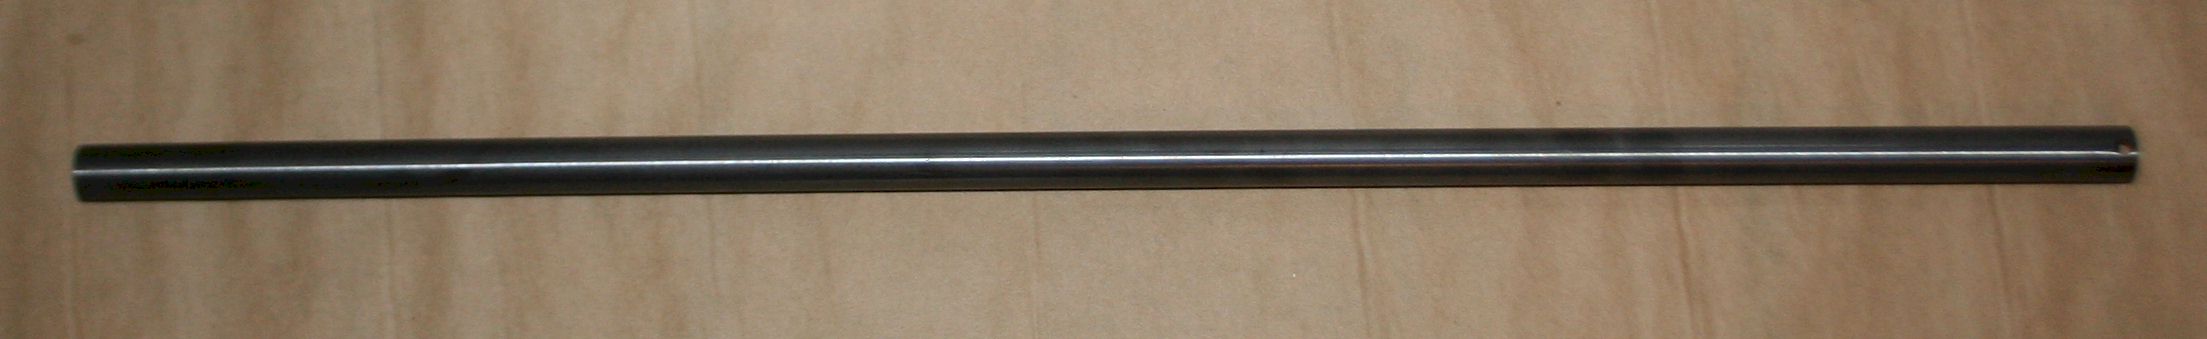 Magazine tube - Winchester Rifle 23 5/8 pre 64 Large cal 1892, 1894, 1866, 1873, Marlin ORIGINAL